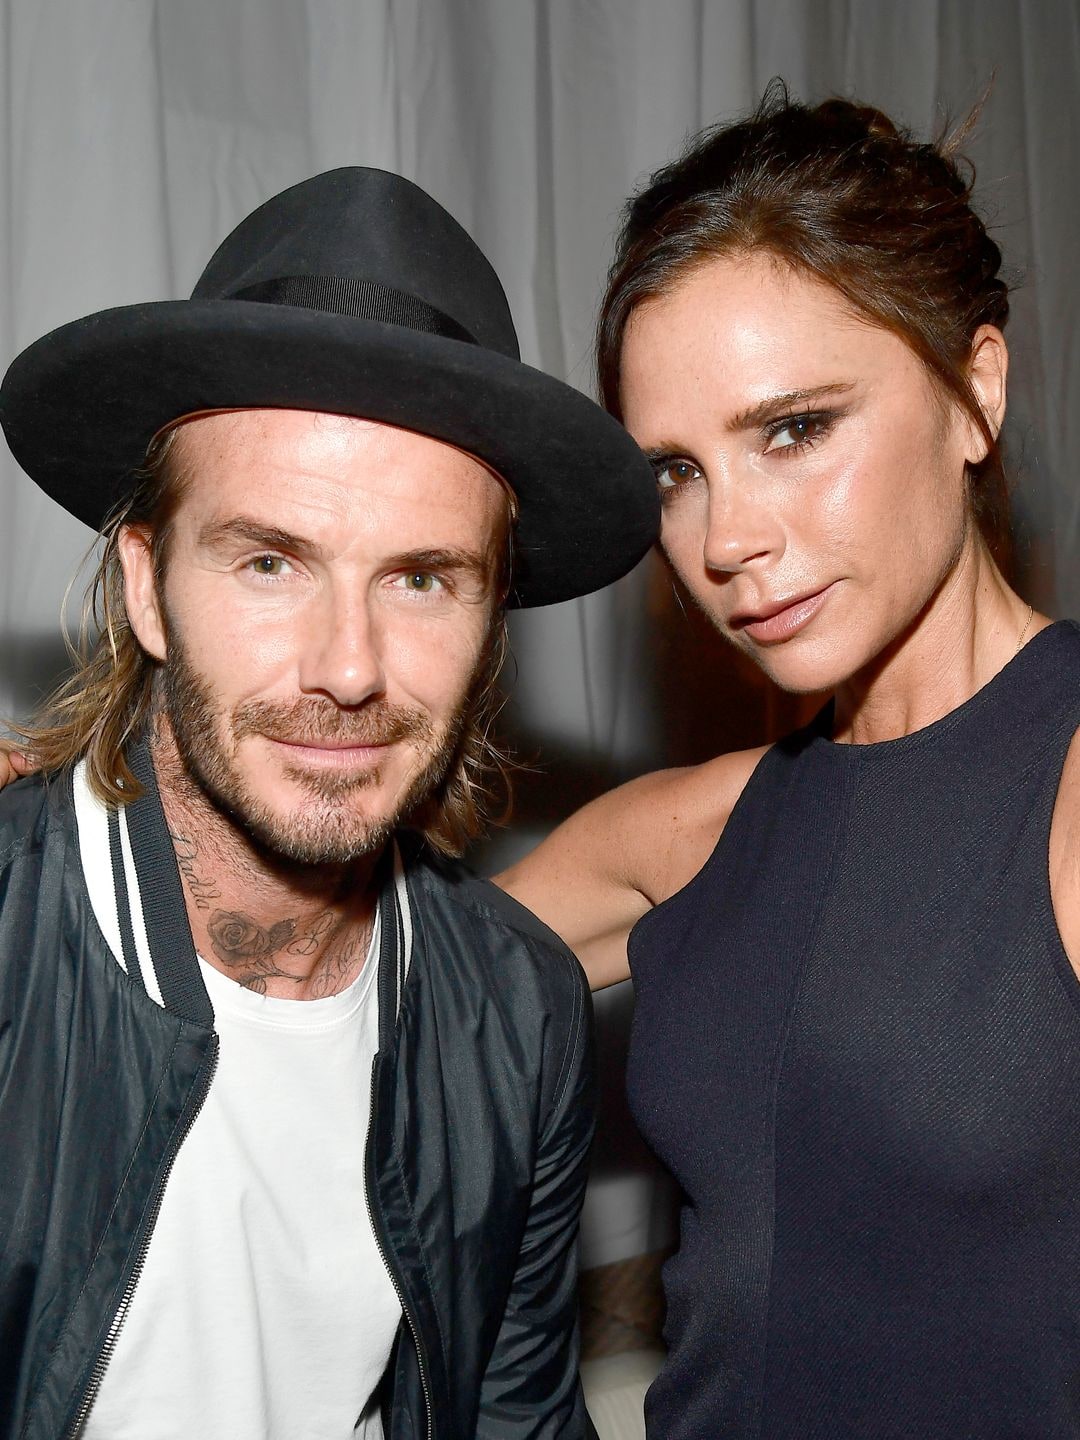 Victoria and her husband David Beckham